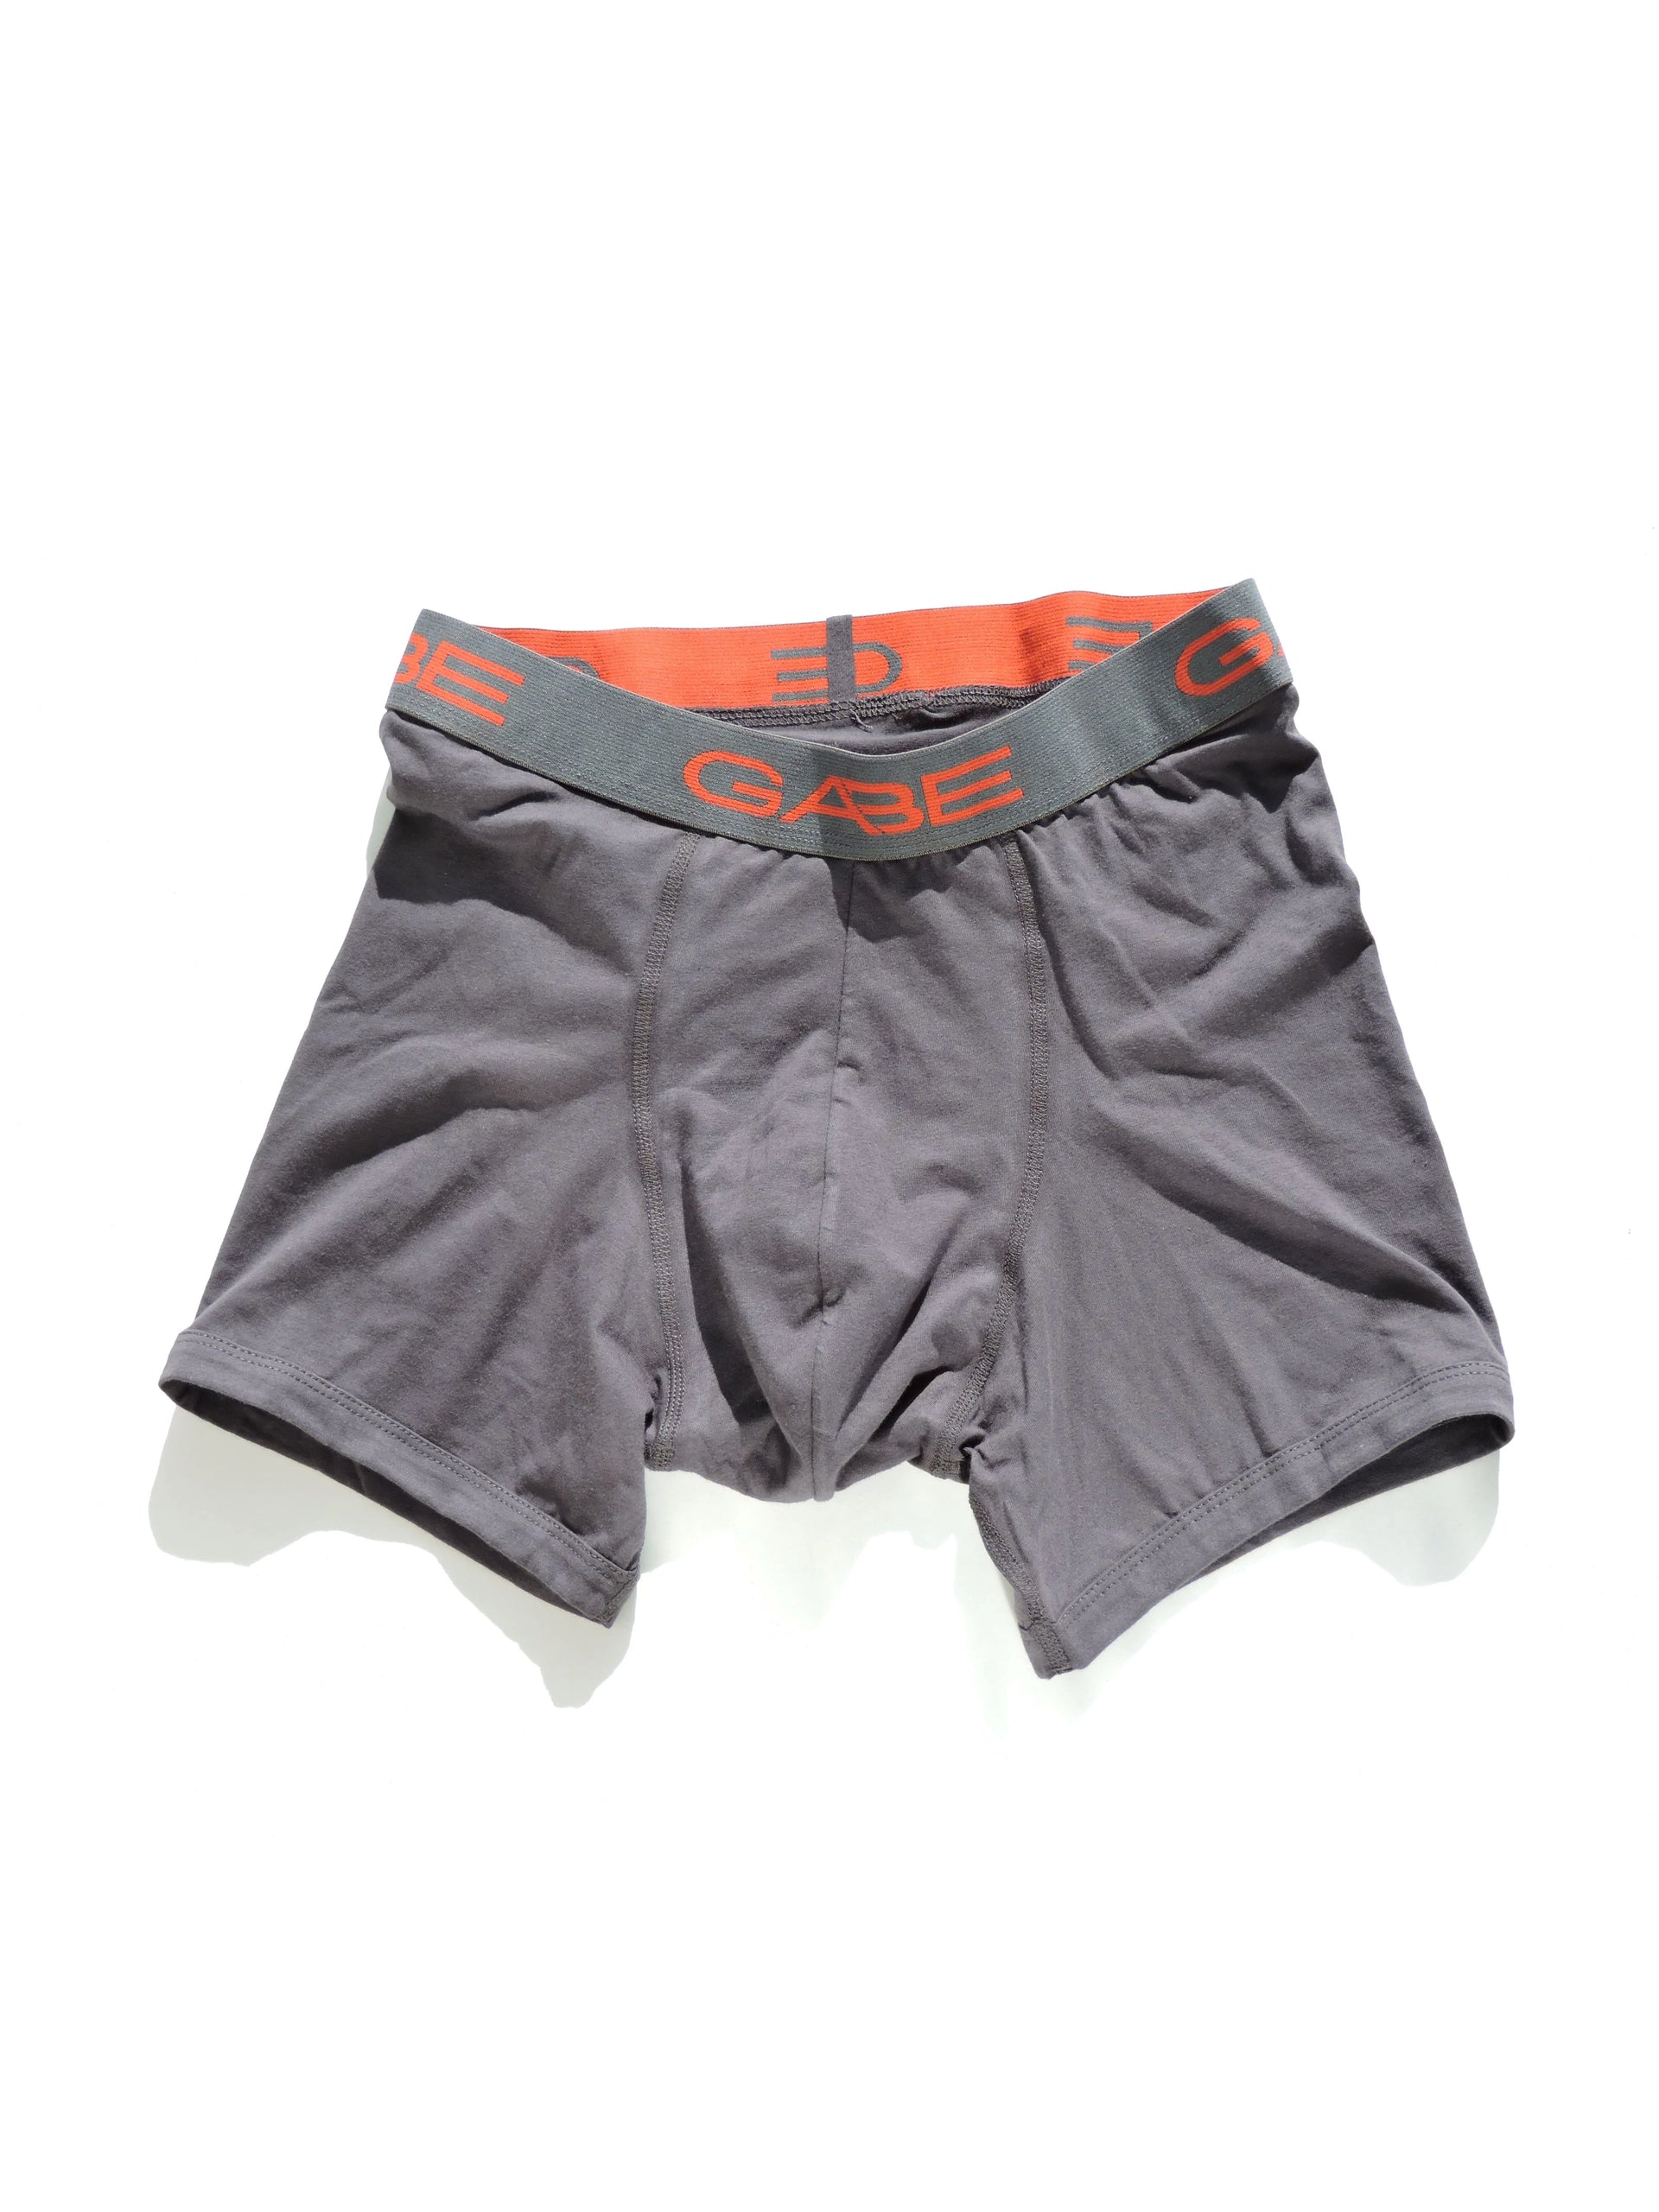 Reearm 100% Pure Cotton Men's Boxer Shorts Seamless Underwear For Sports  Running